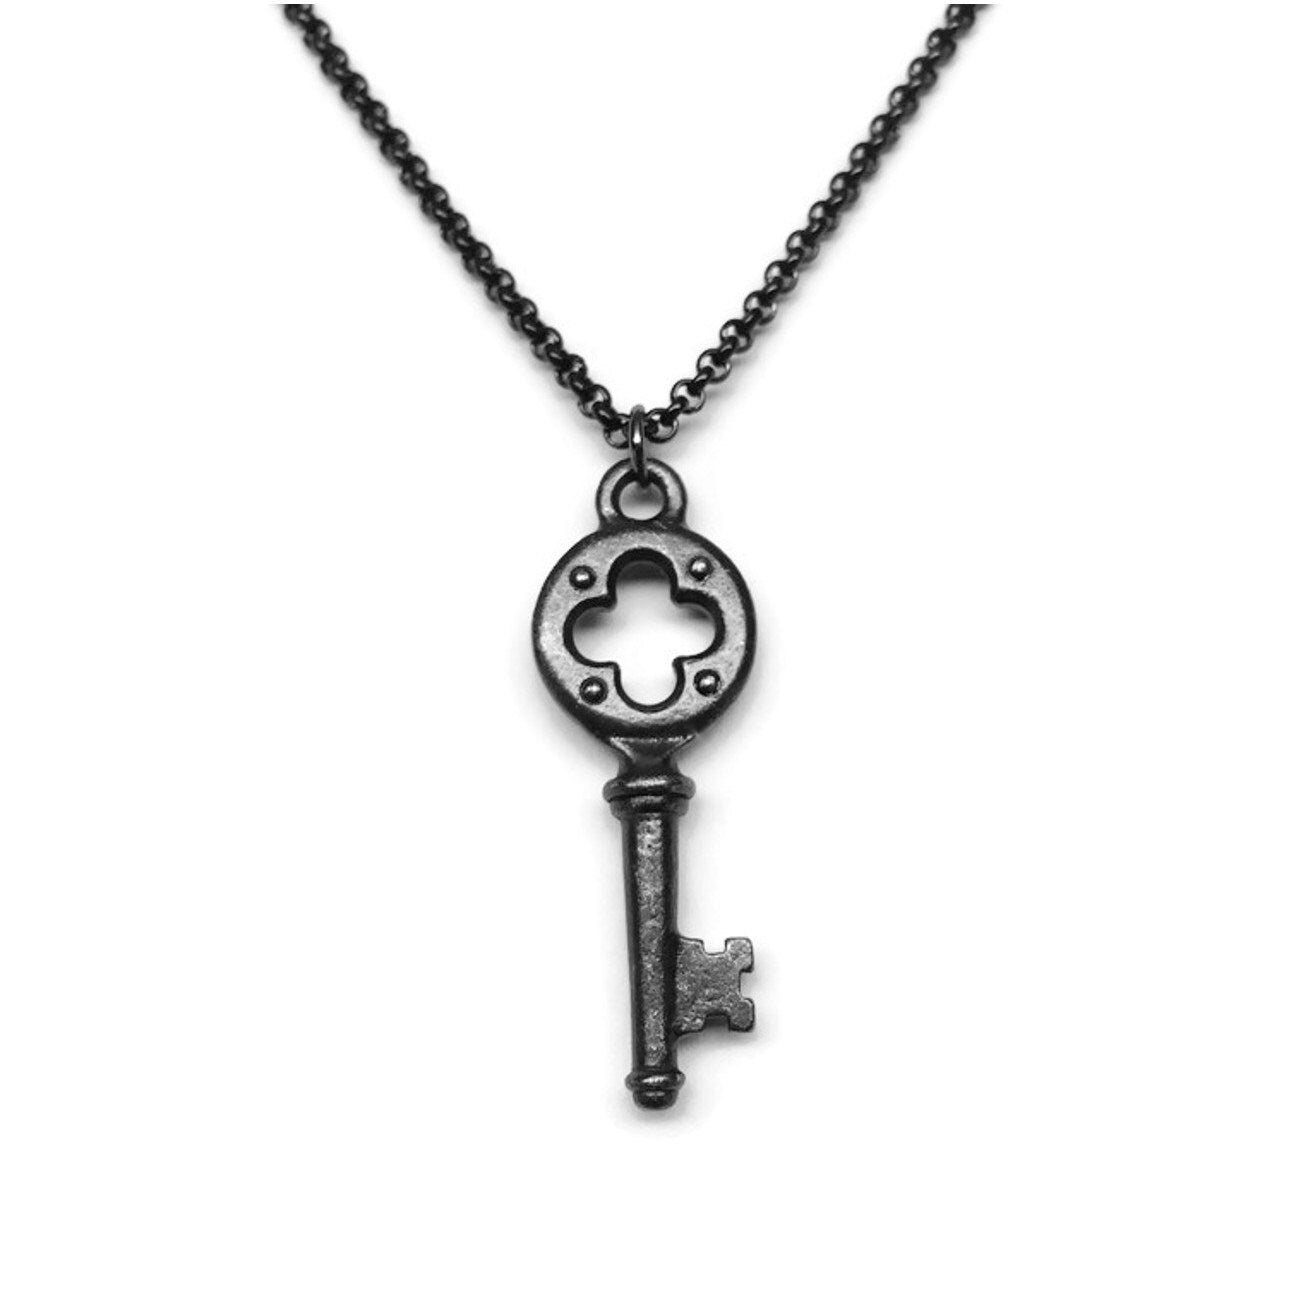 Small Silver Key Charm Necklace - Medieval Design - Skeleton Key - Loralyn Designs 18